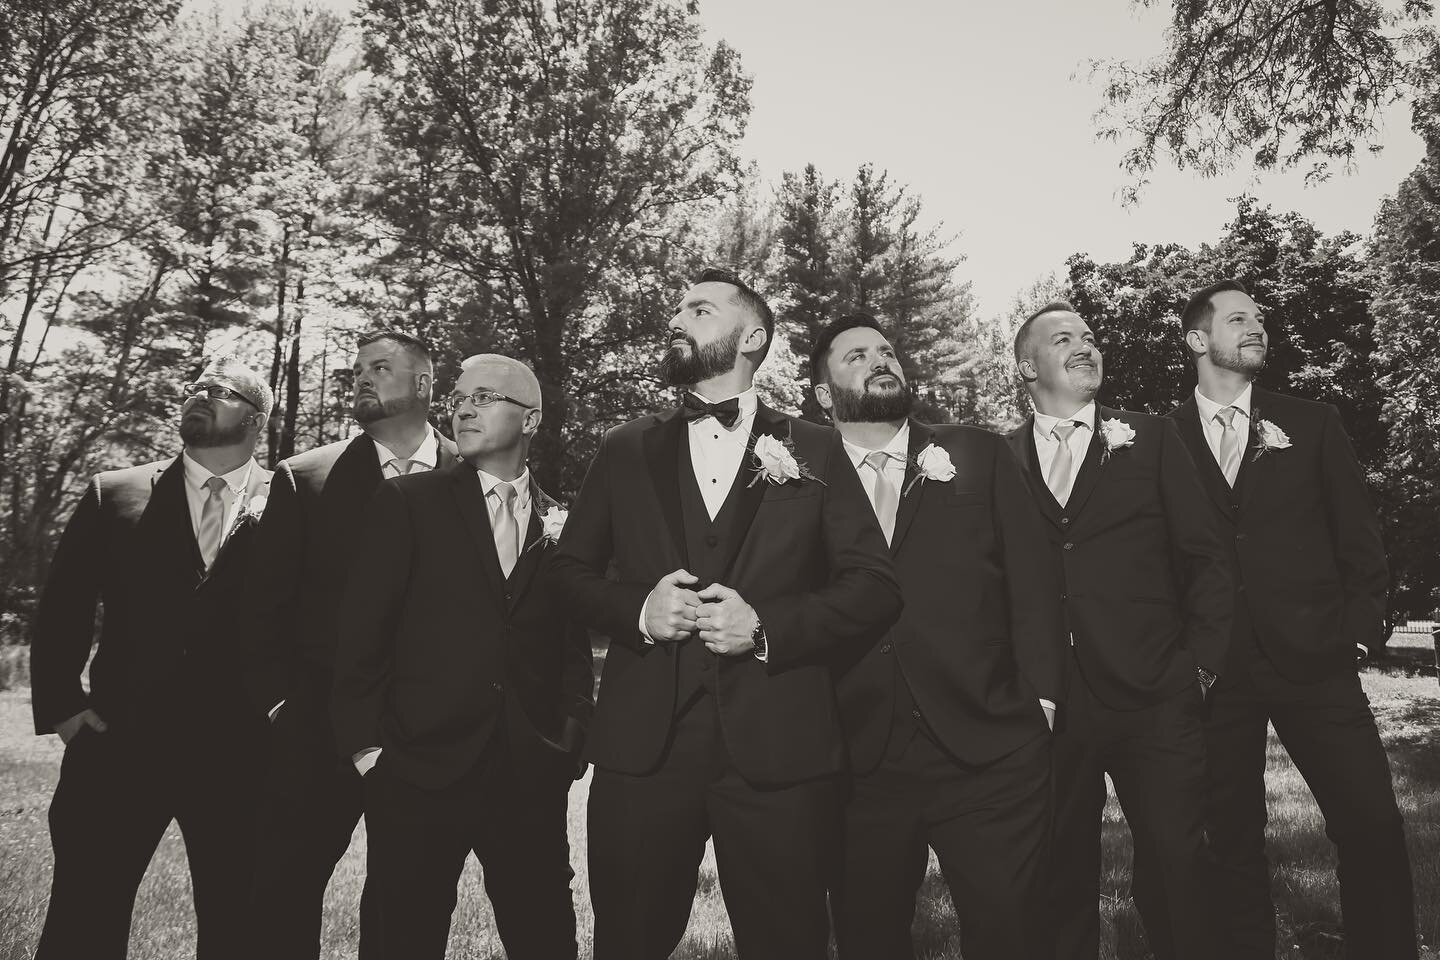 Family. 

#groom #groomsman #family #photography #potd #welldressed #blackandwhite #scenery #djservices #entertainment #videography #cinematography #wedding #celebrate #evermor #eeg 

📸: @david_quiroga #askfordavid